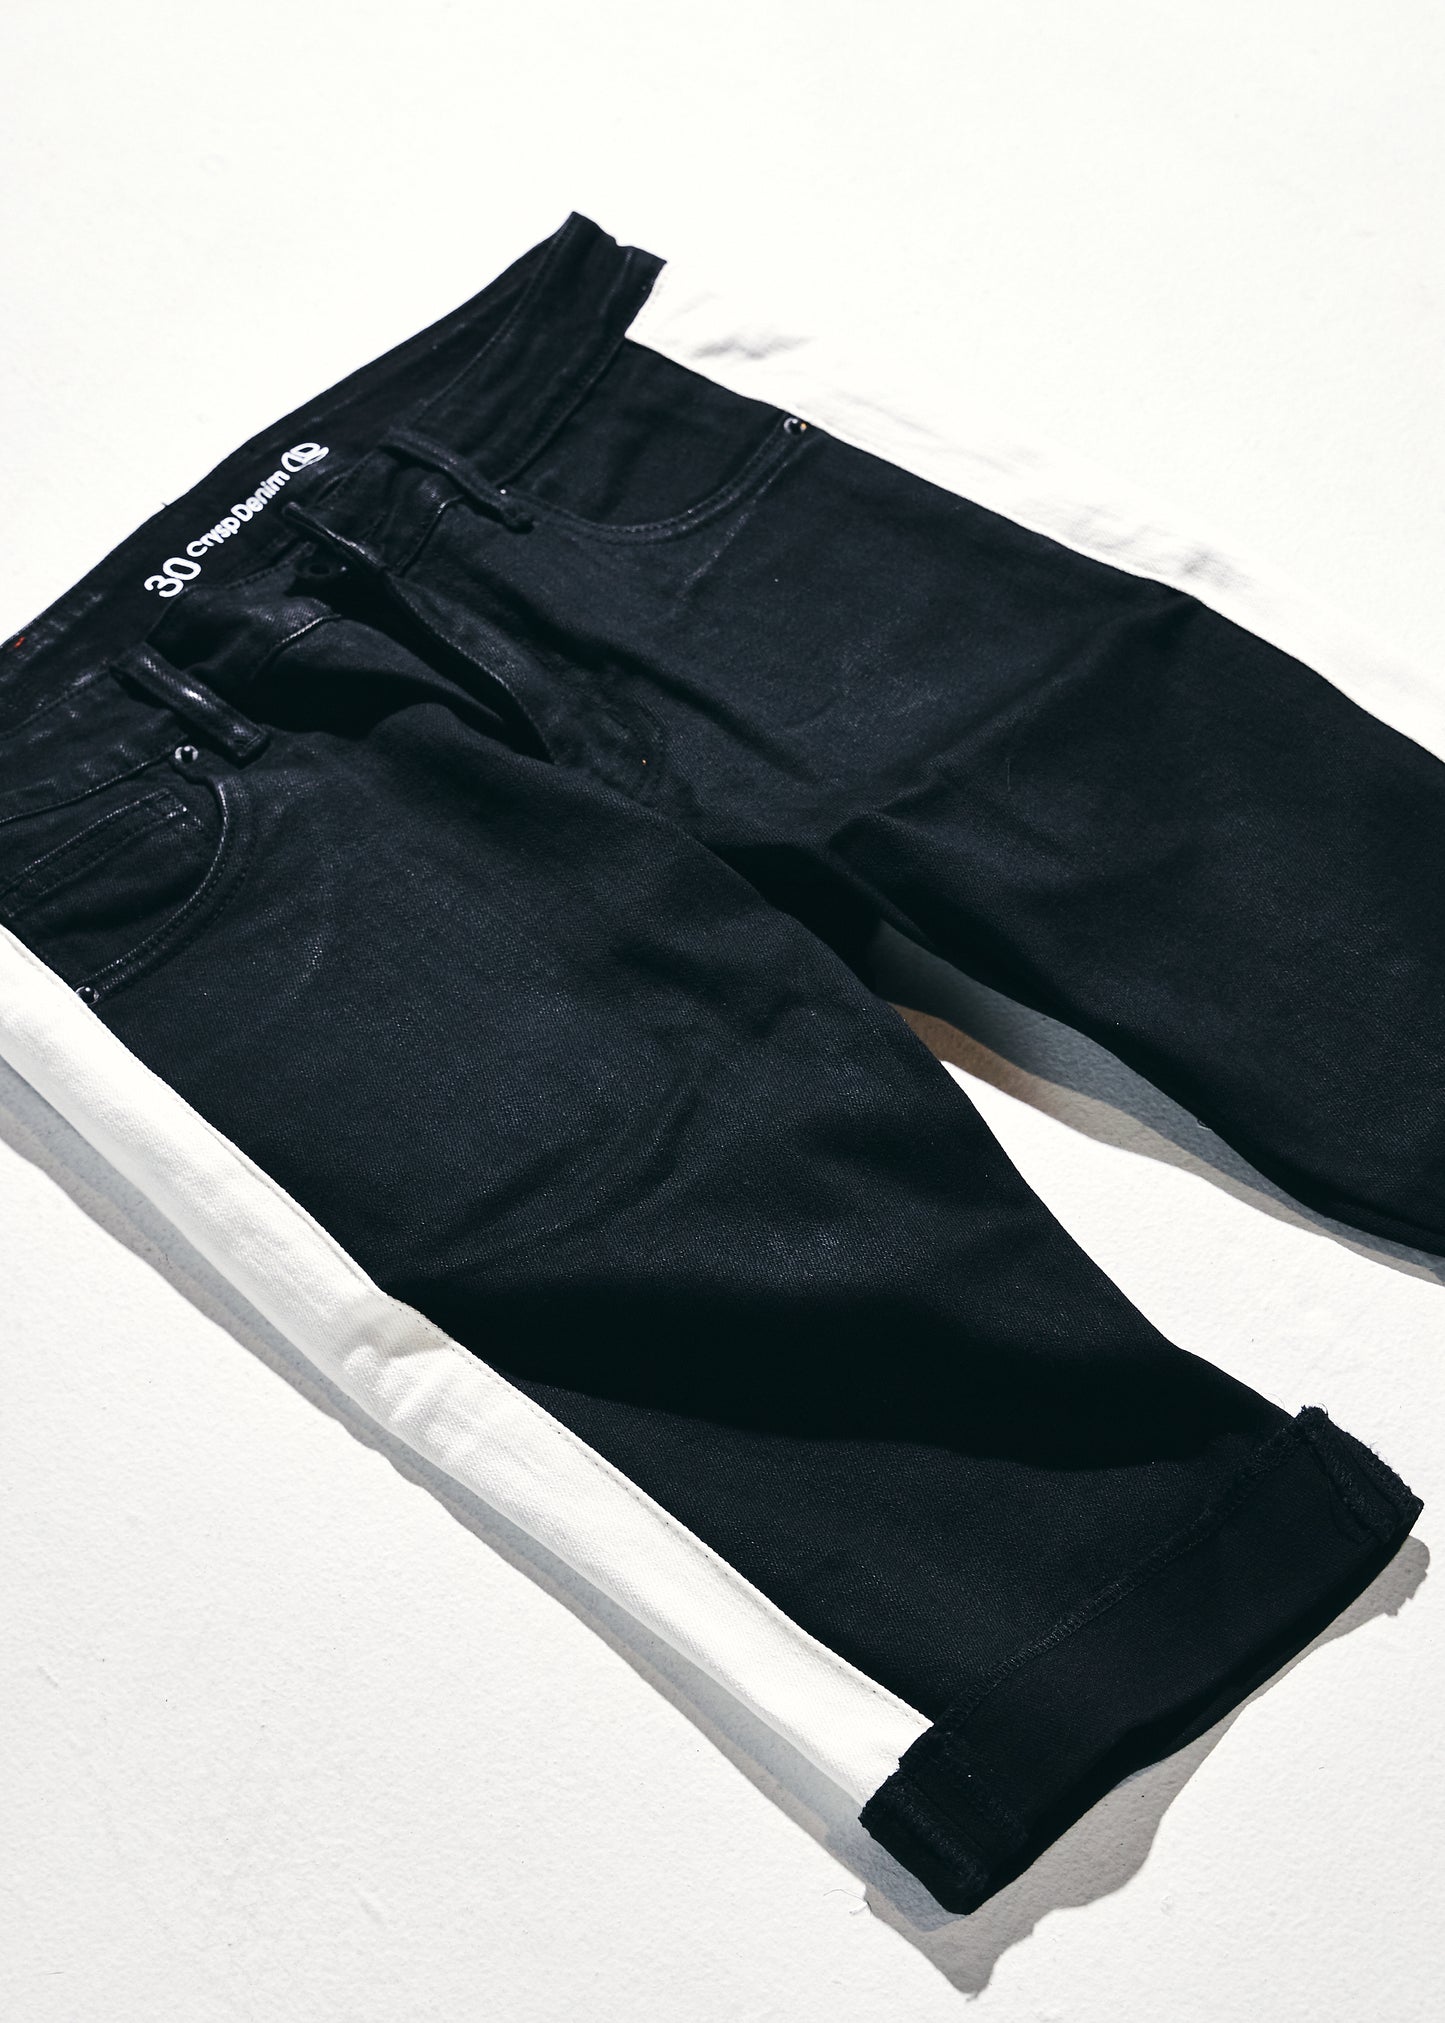 Philips Shorts (Black Stripe)